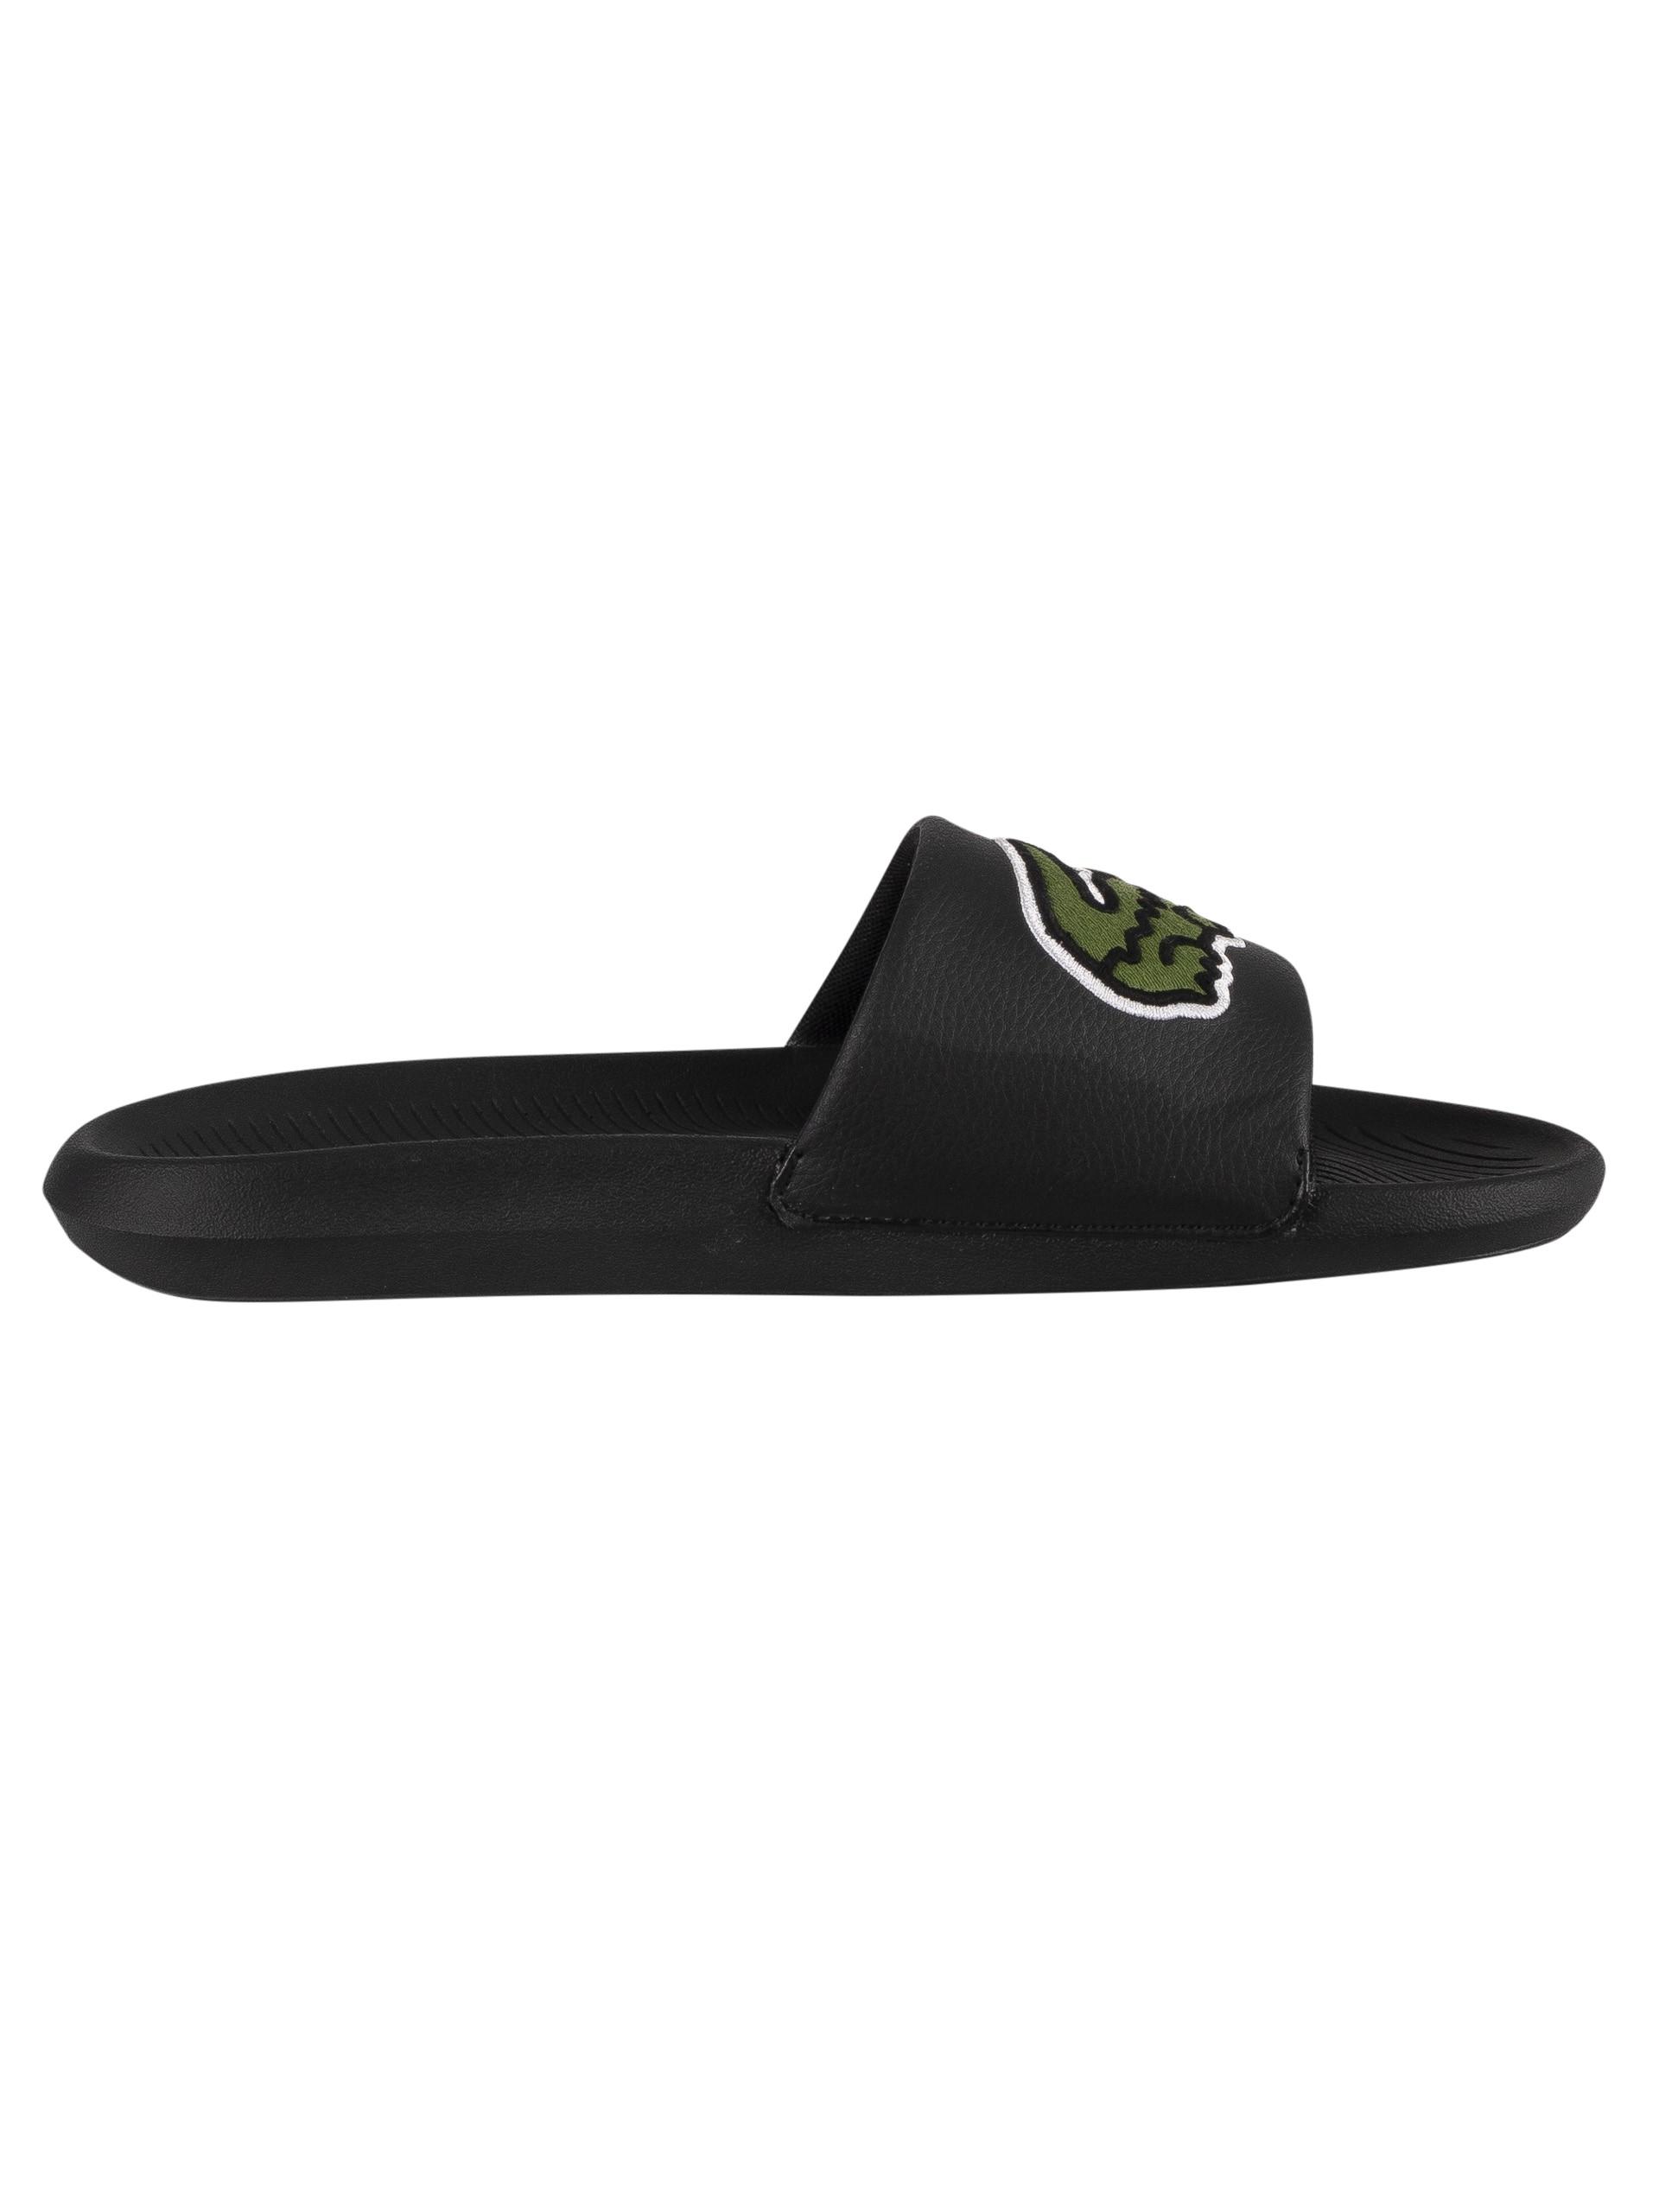 Lacoste Rubber Croco Slides in Black/Green (Black) for Men - Save 53% | Lyst